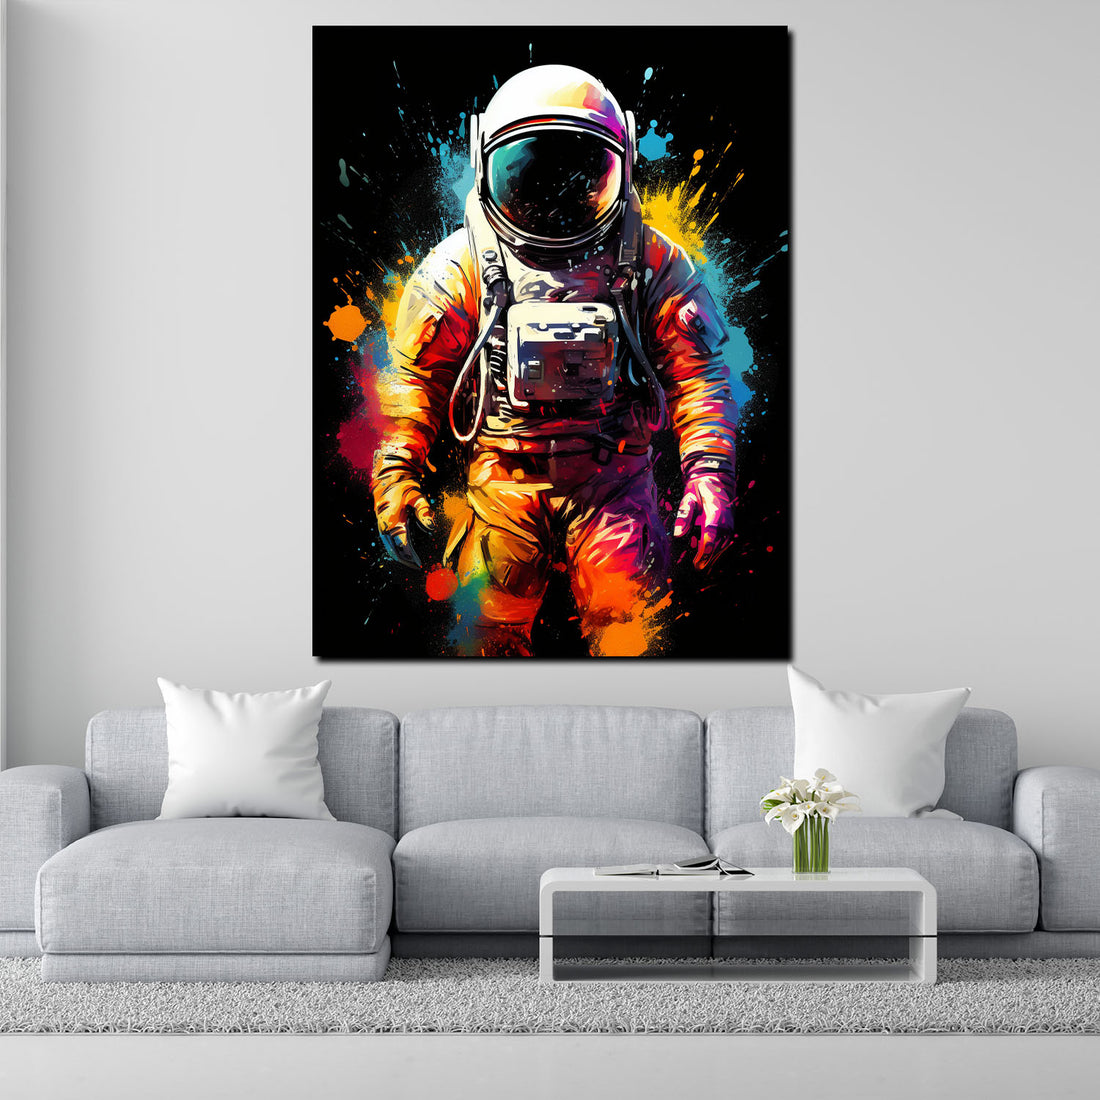 Wandbild abstrakte Kunst Astronaut, Pop Art